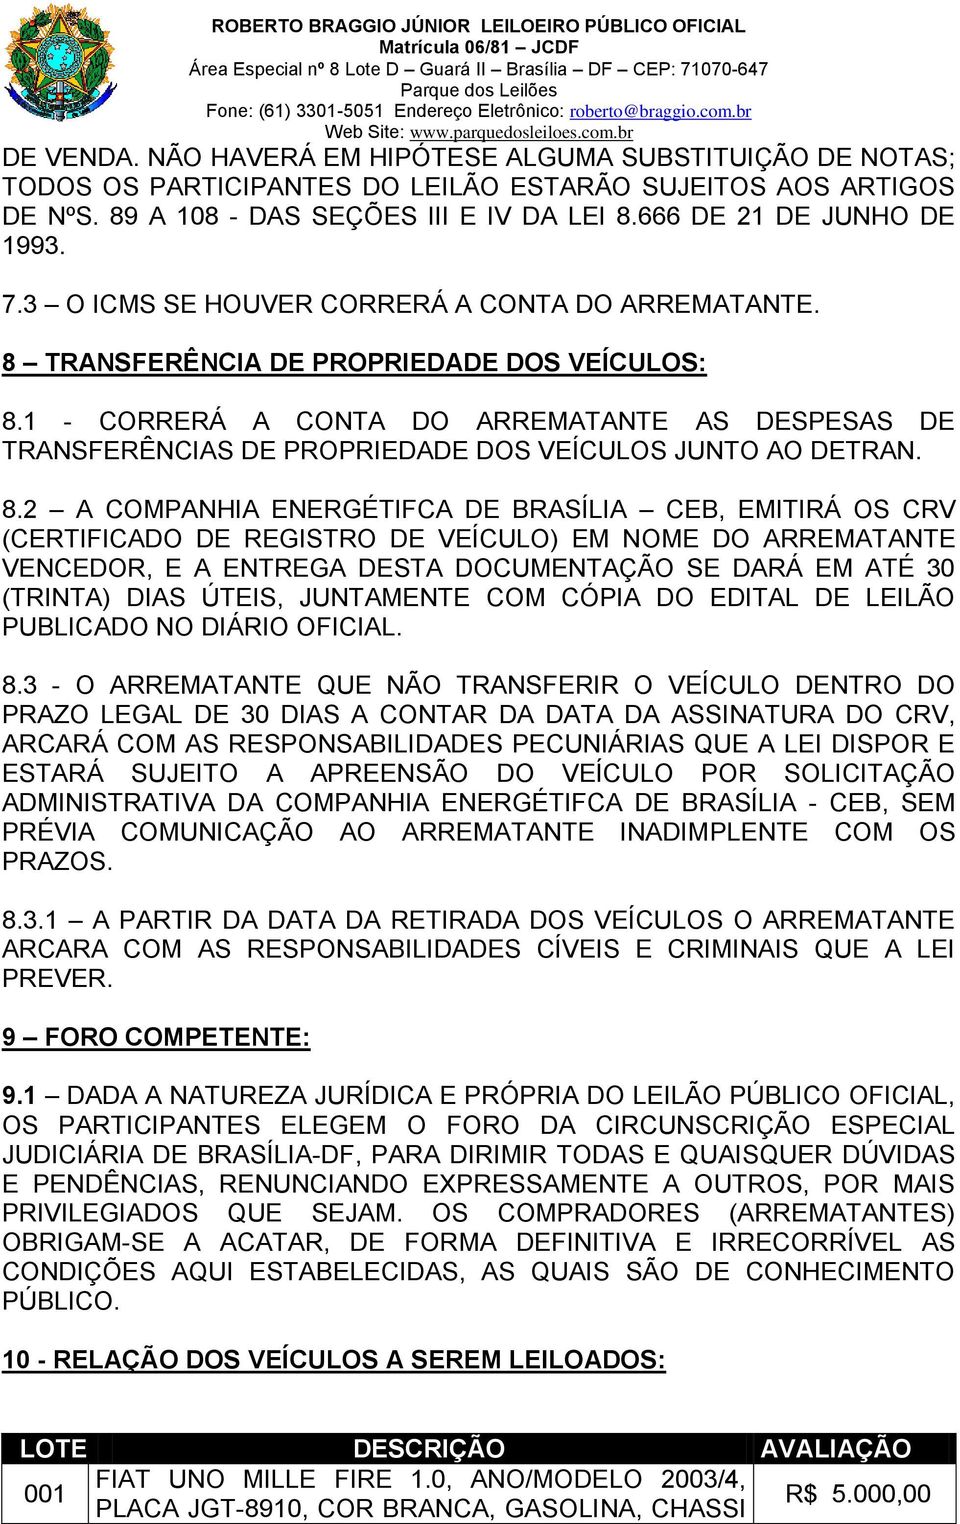 1 - CORRERÁ A CONTA DO ARREMATANTE AS DESPESAS DE TRANSFERÊNCIAS DE PROPRIEDADE DOS VEÍCULOS JUNTO AO DETRAN. 8.